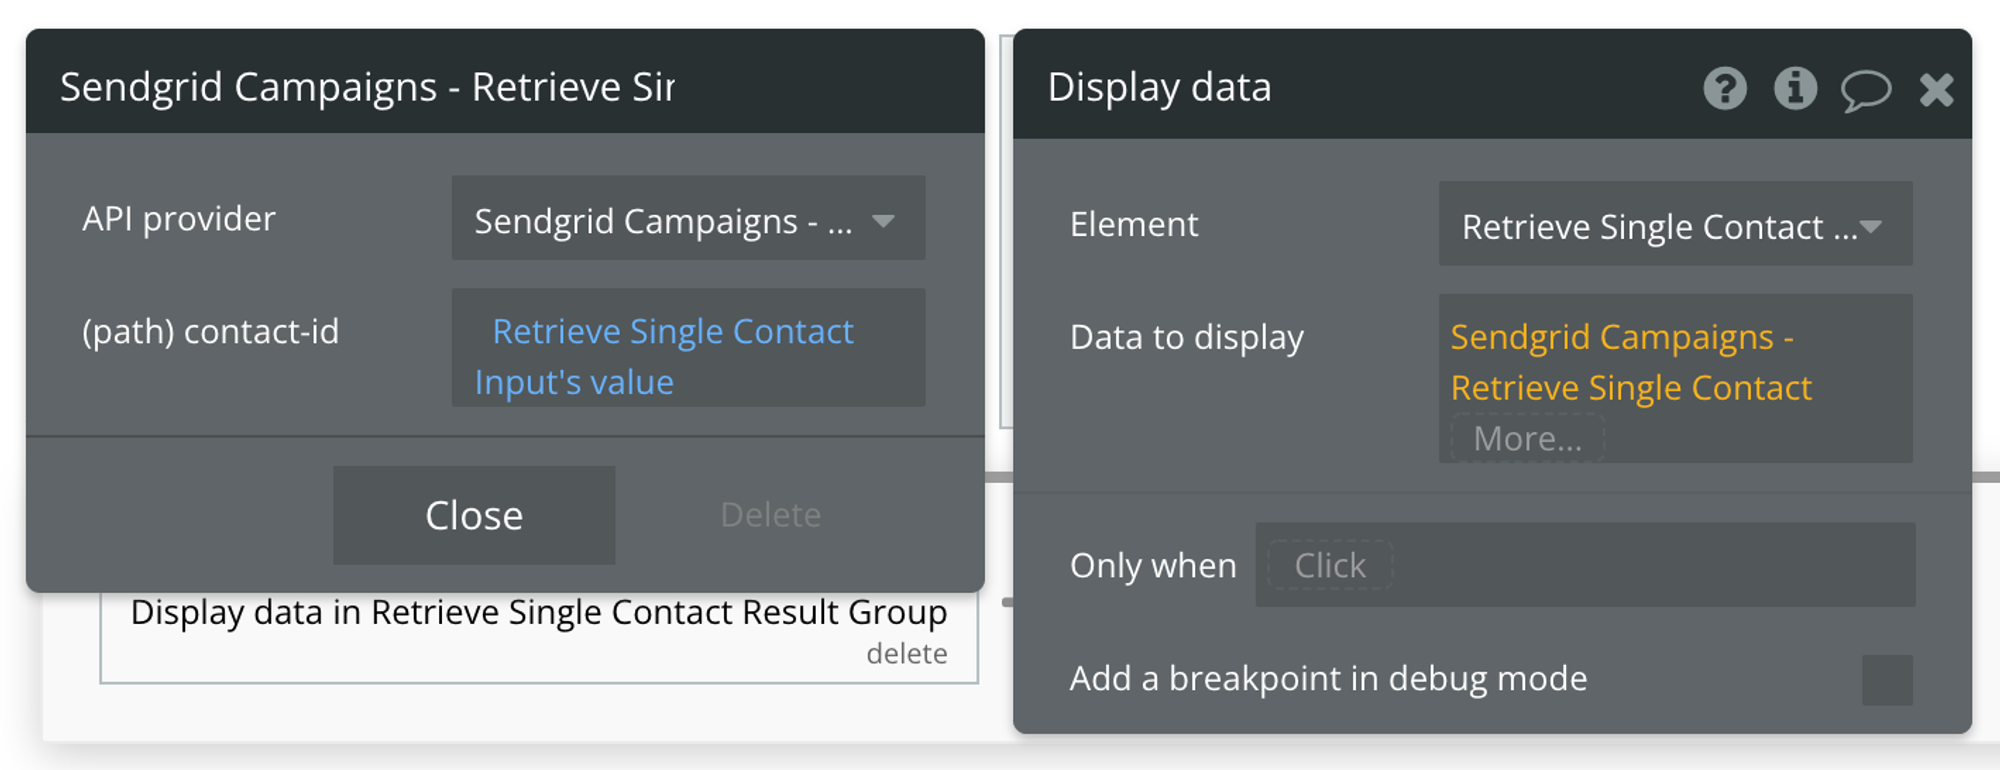 Select Sendgrid Campaign - Retrieve Single Contact from the API provider dropdown